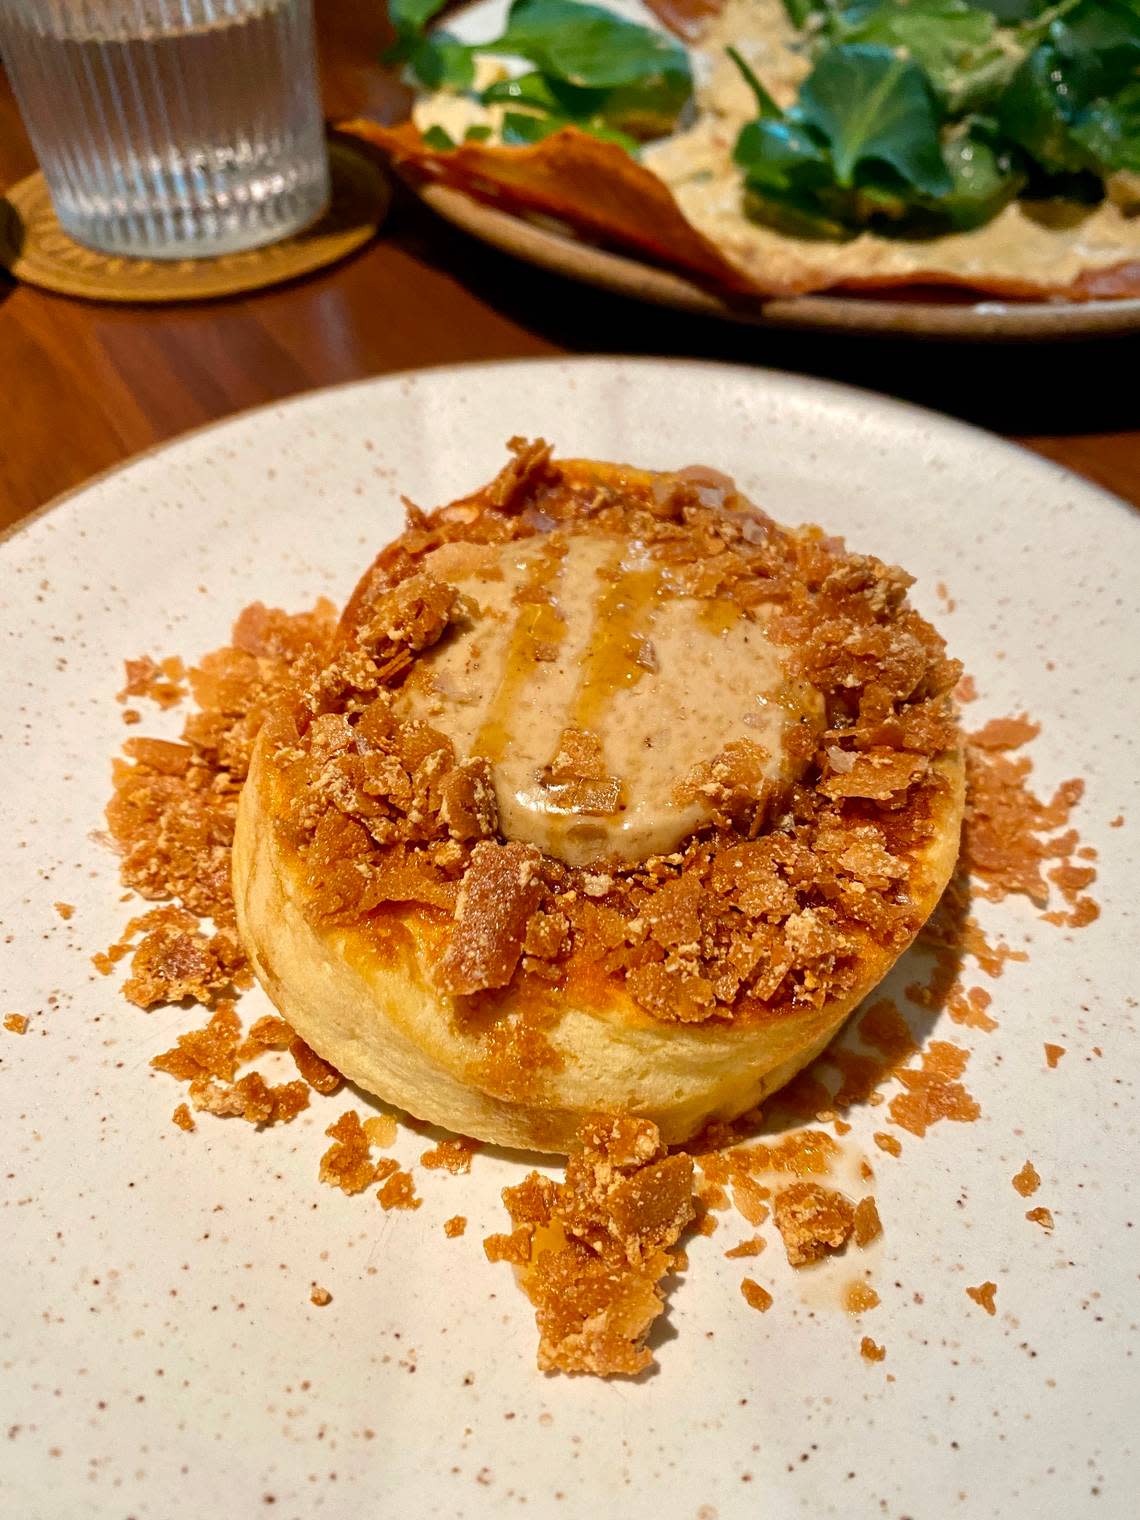 The Town Company’s foie gras pancake.